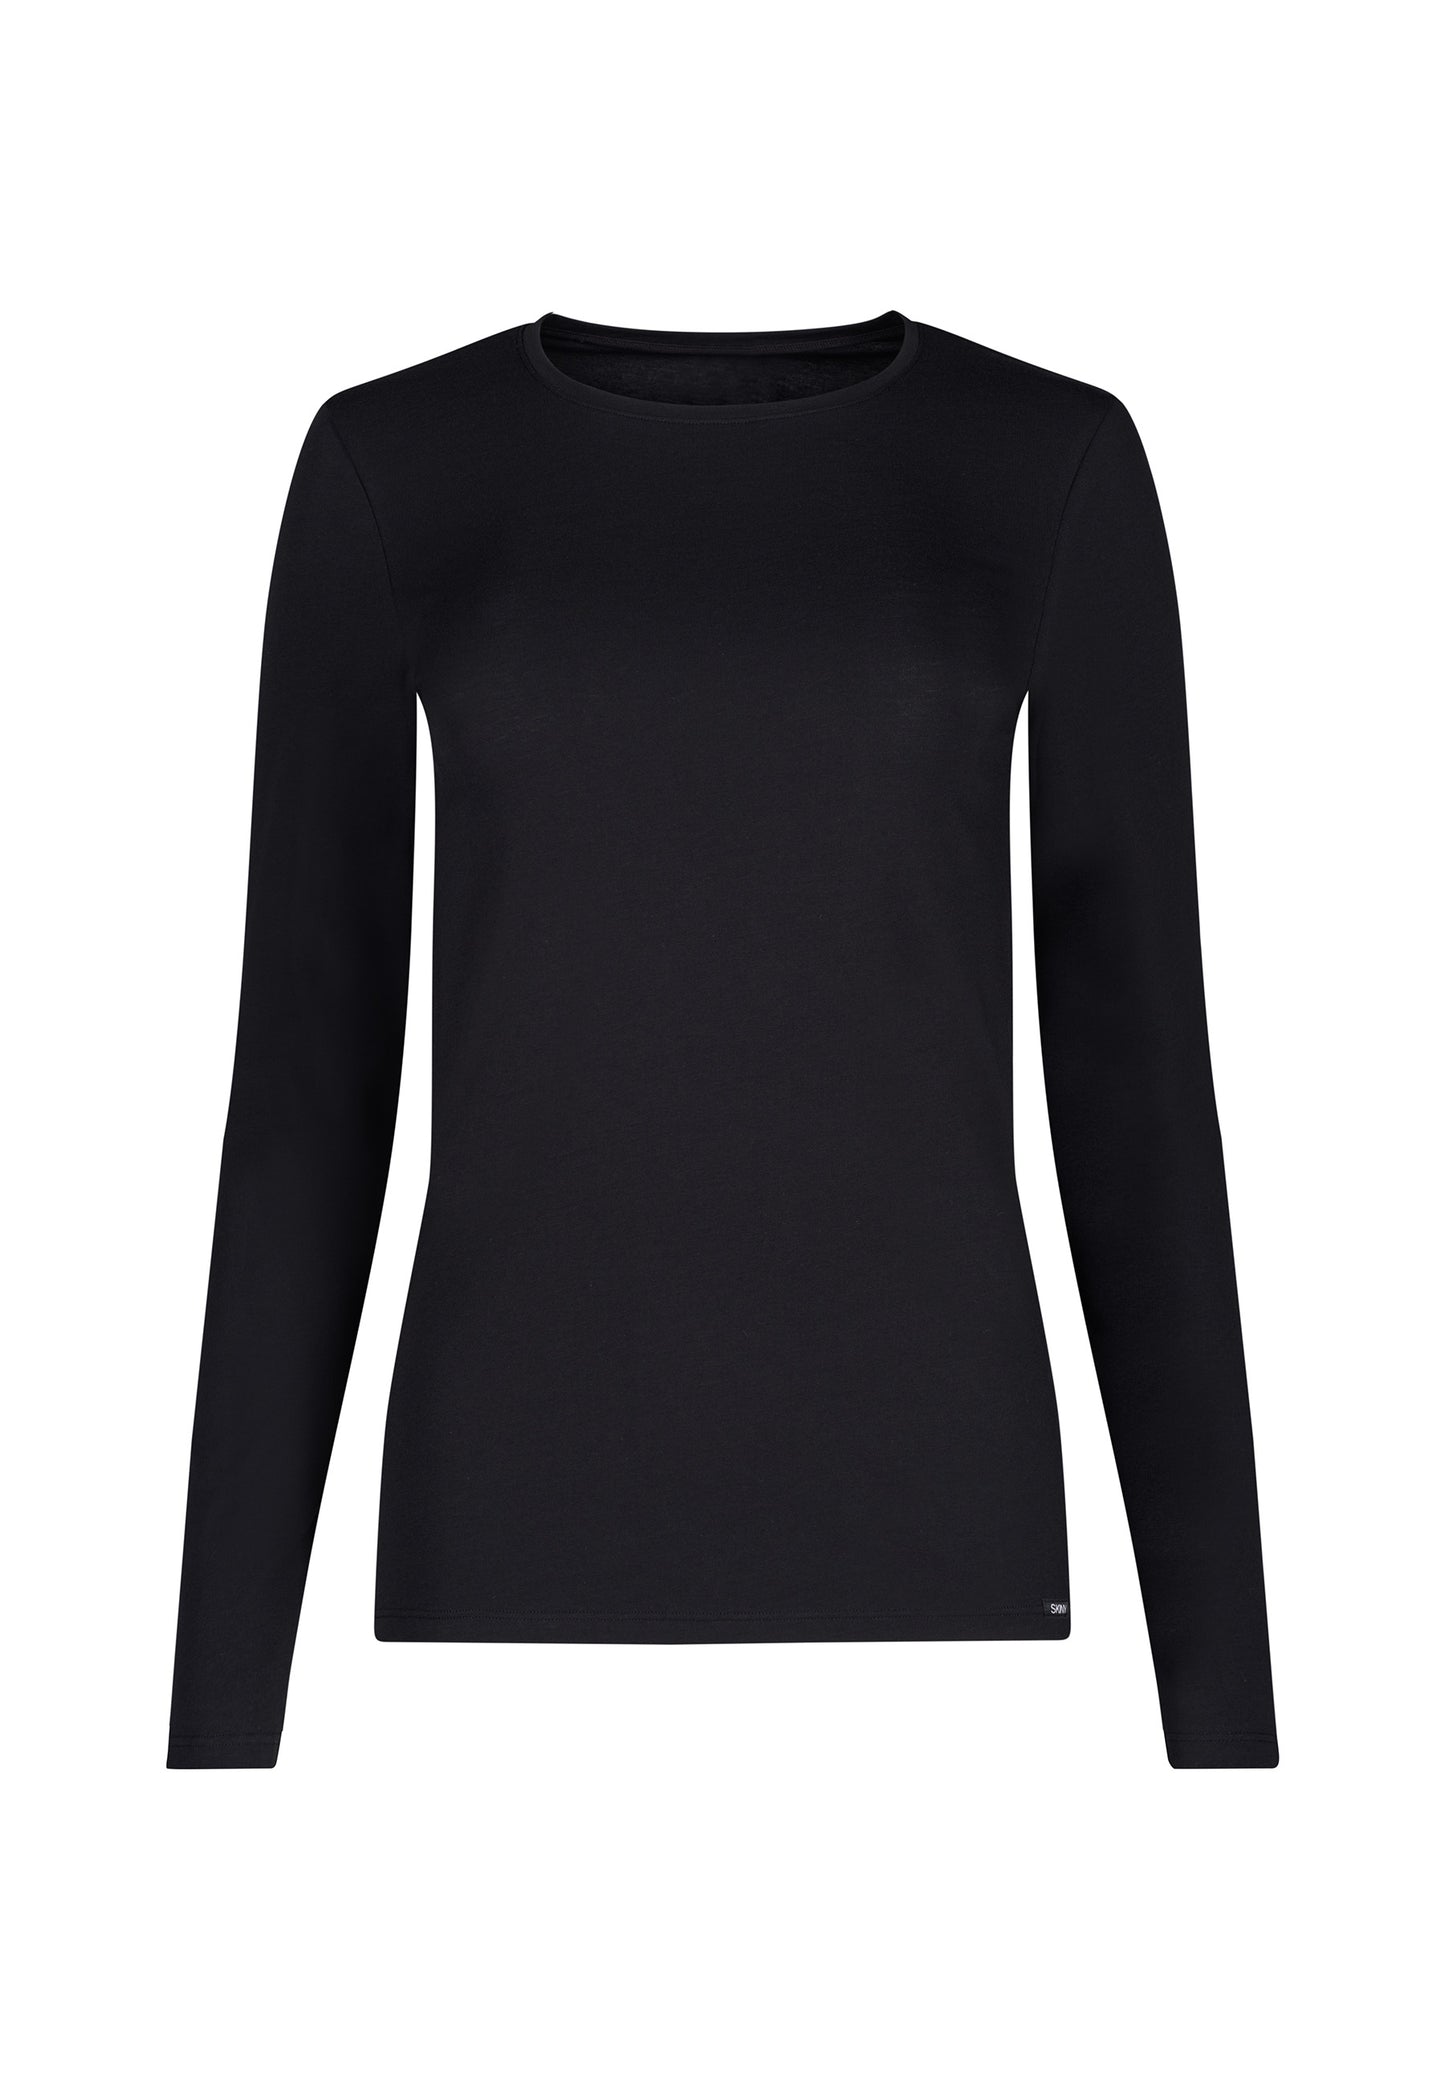 Skiny Damen Shirt langarm Cotton Essentials (Black)